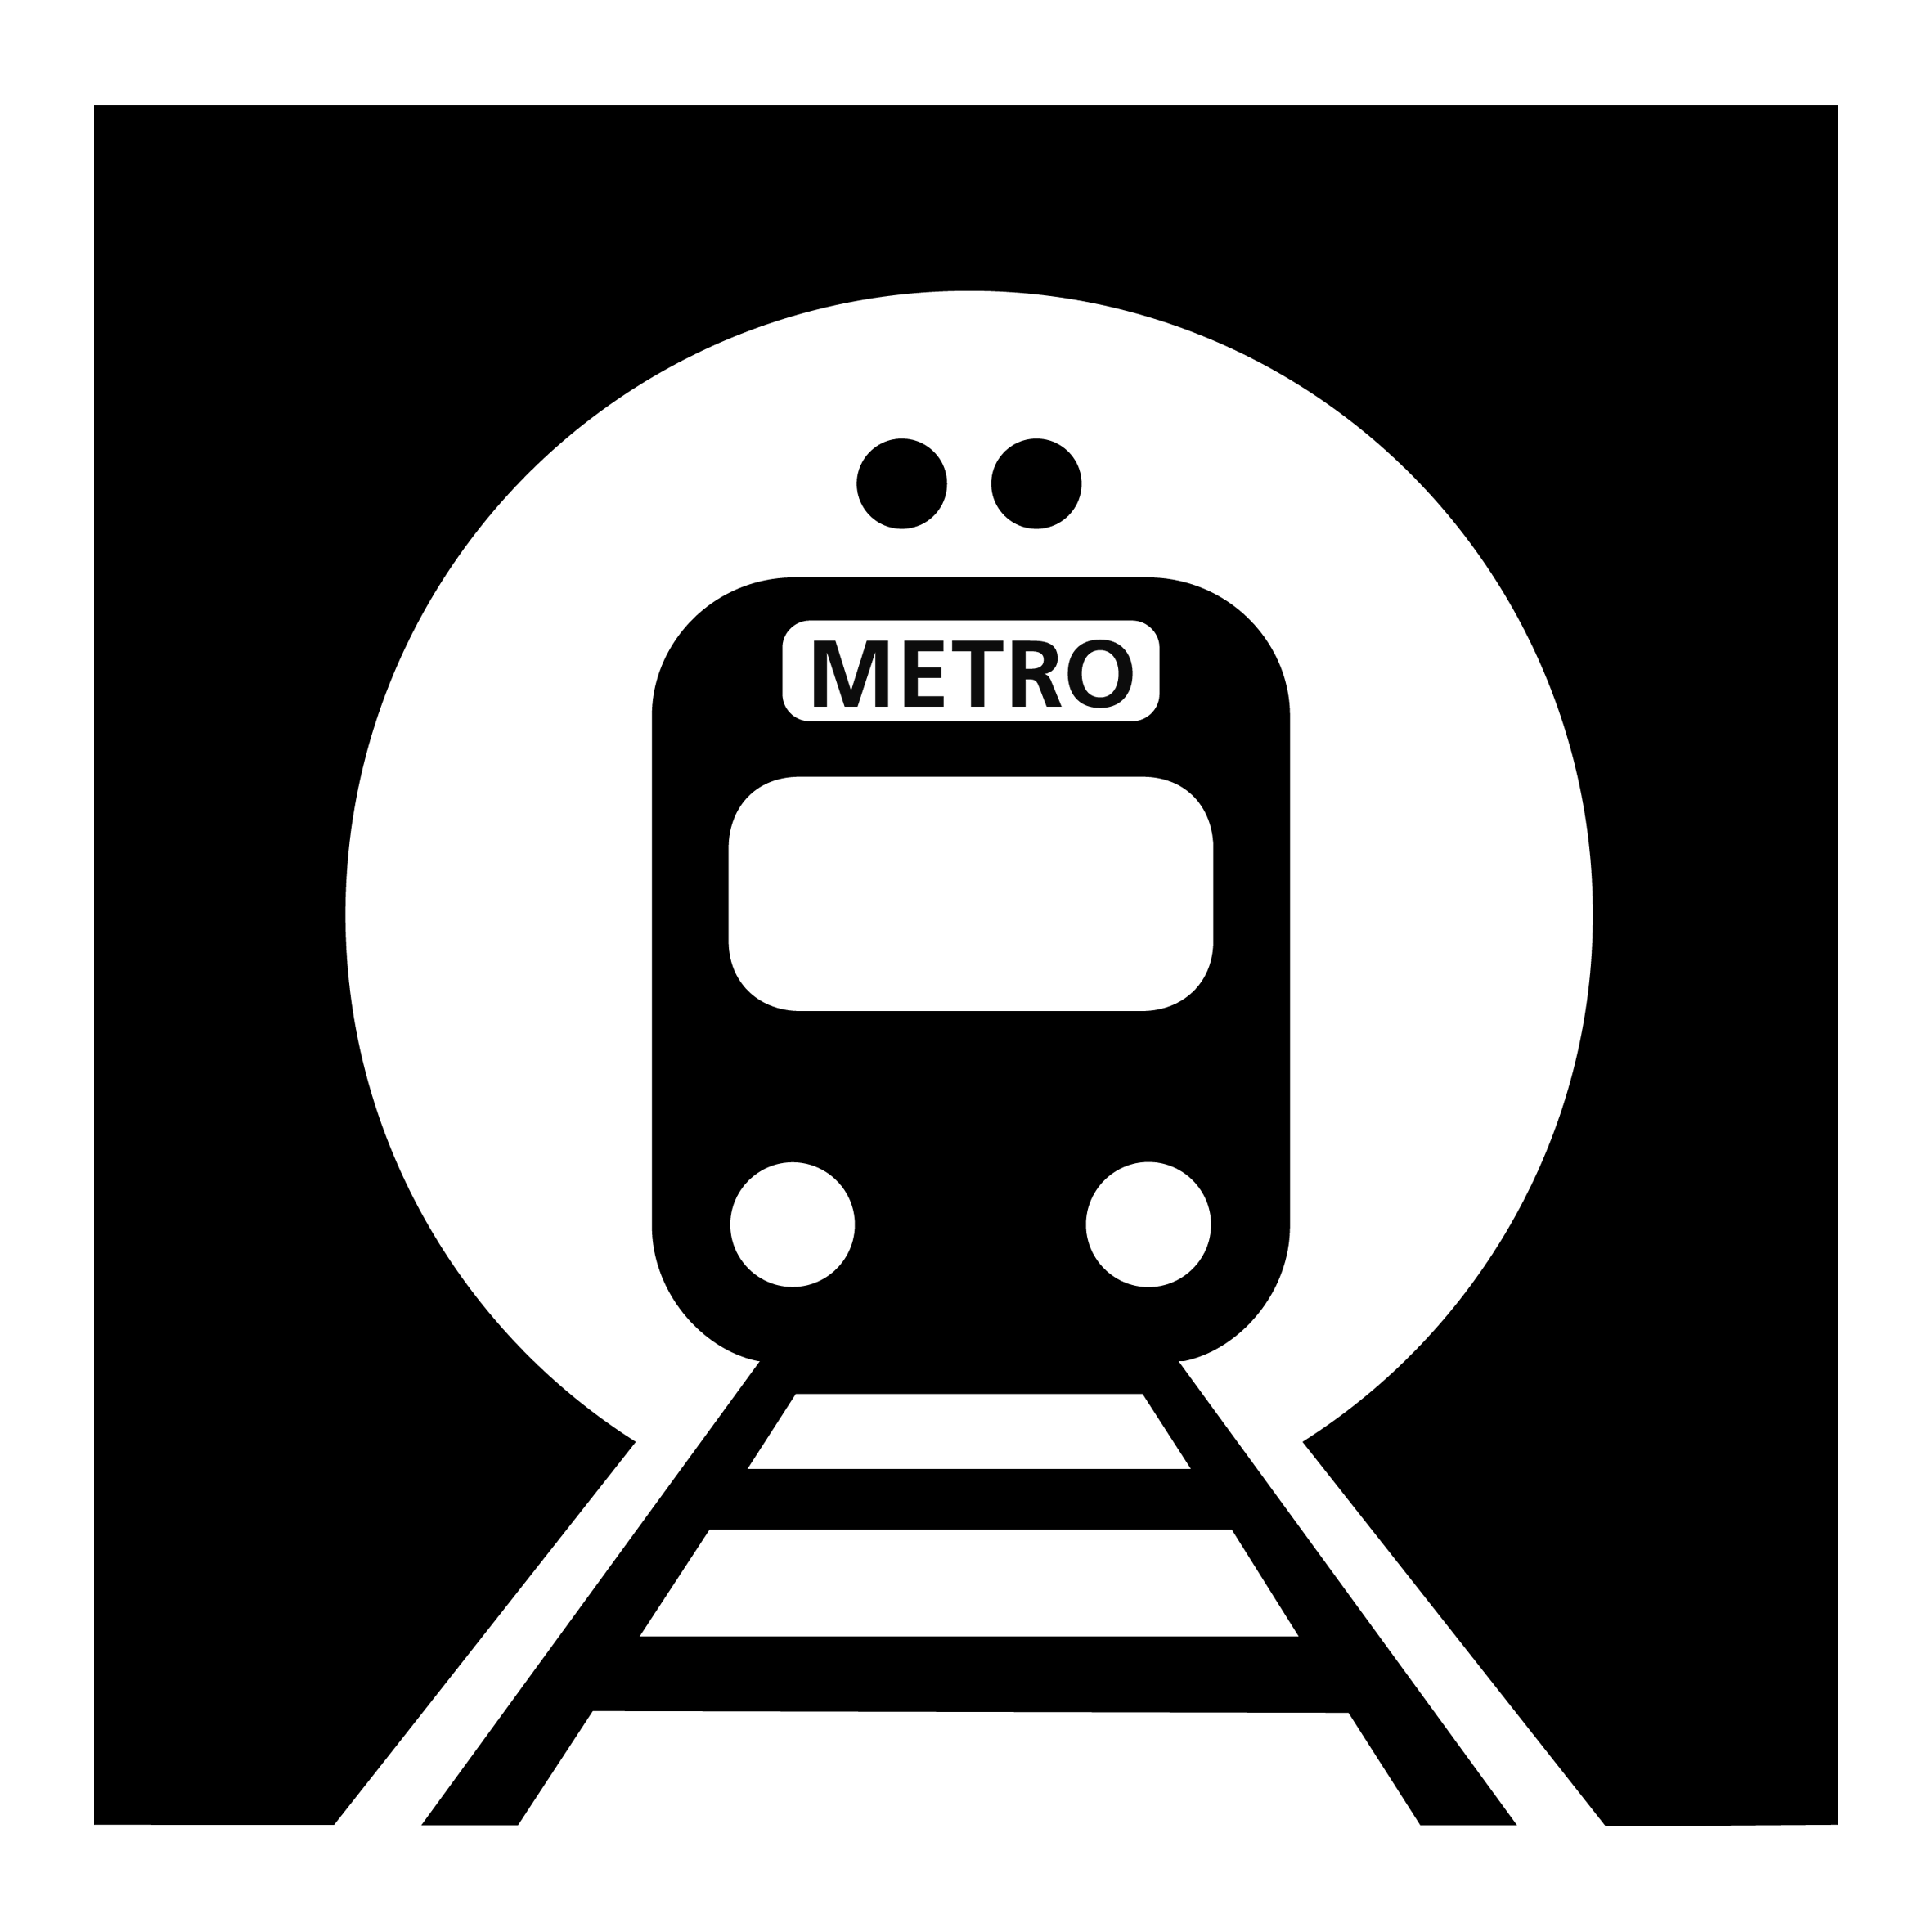 Dibujo en pictograma del Metro